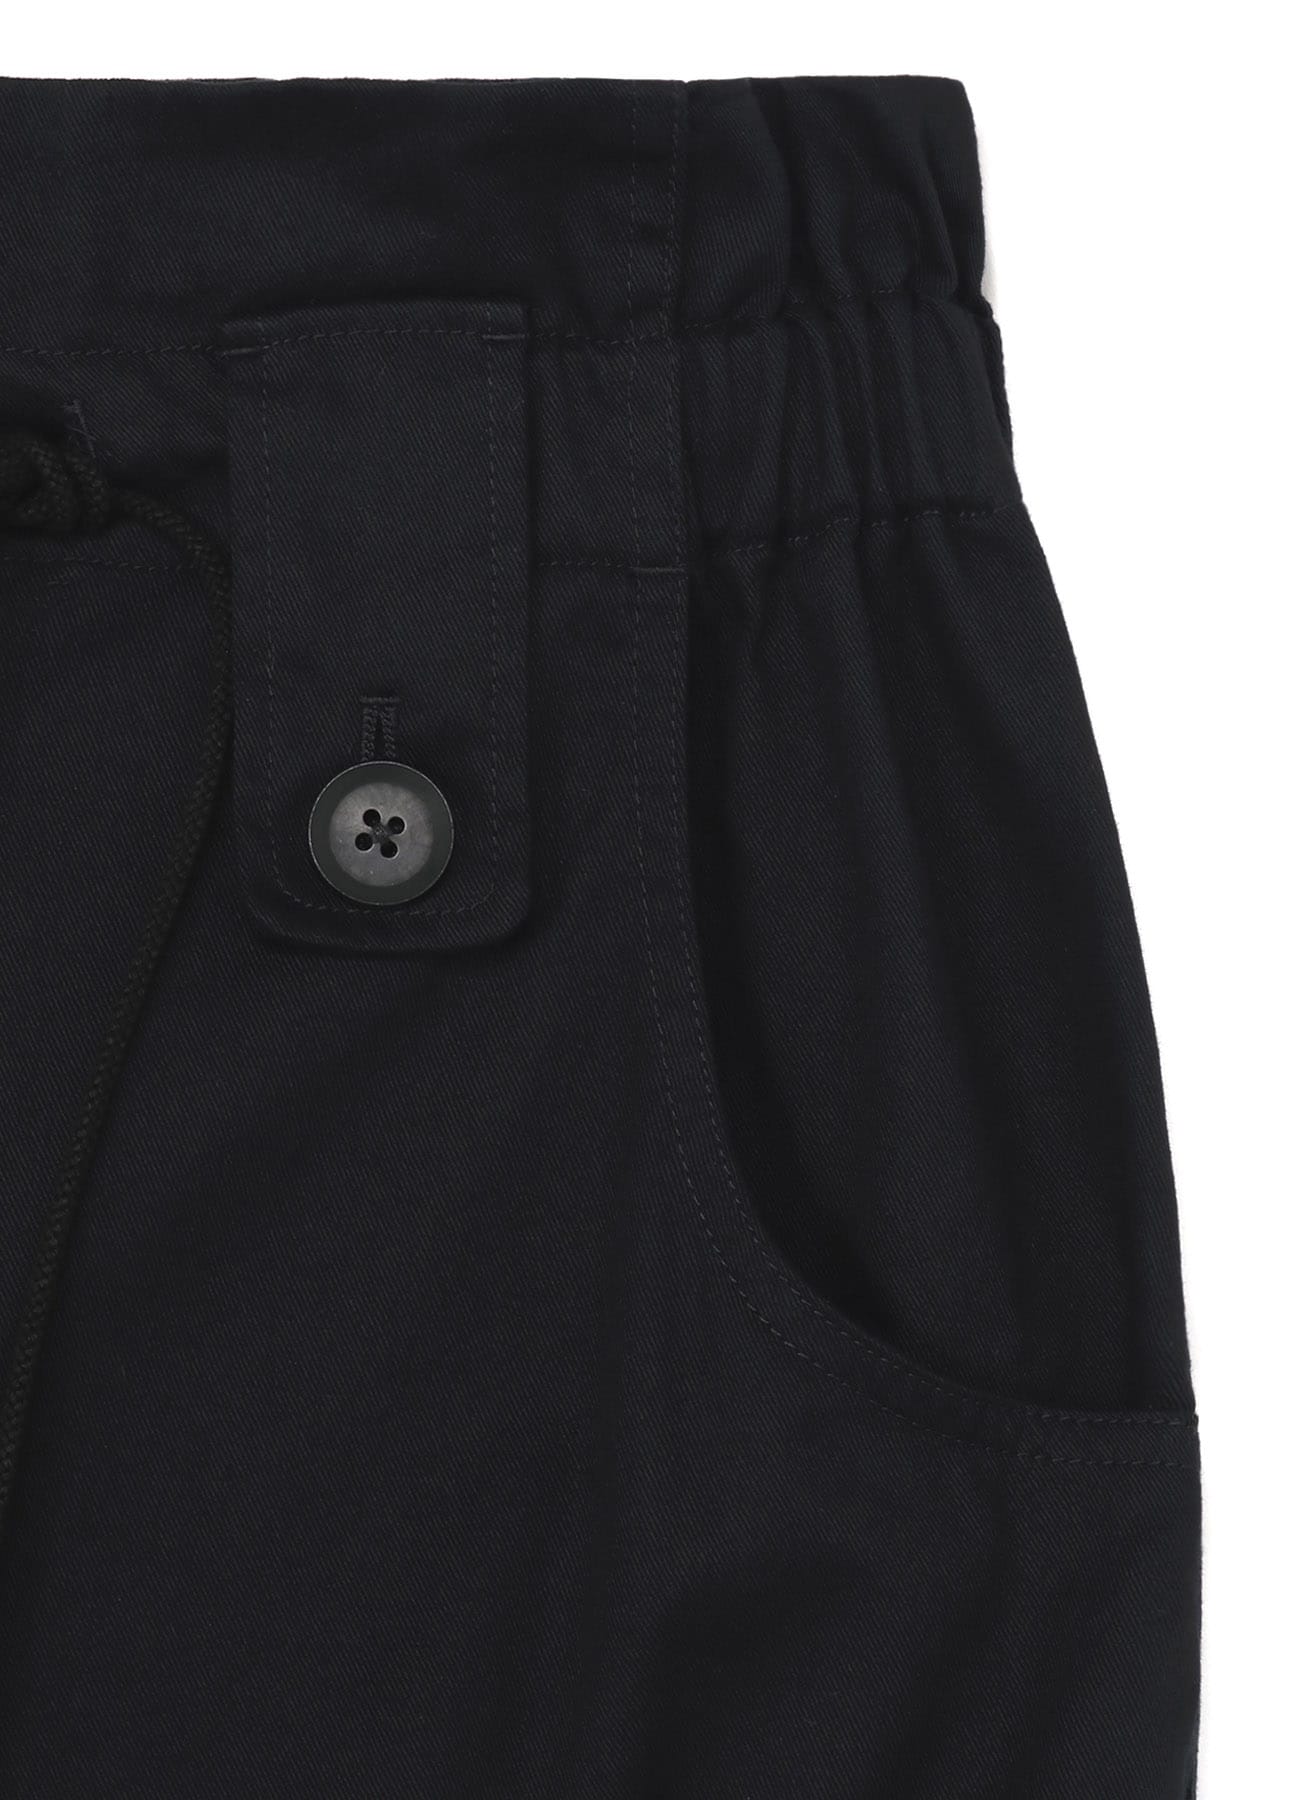 Women's High Waisted Side Pocket Adjustable Button Hem Work